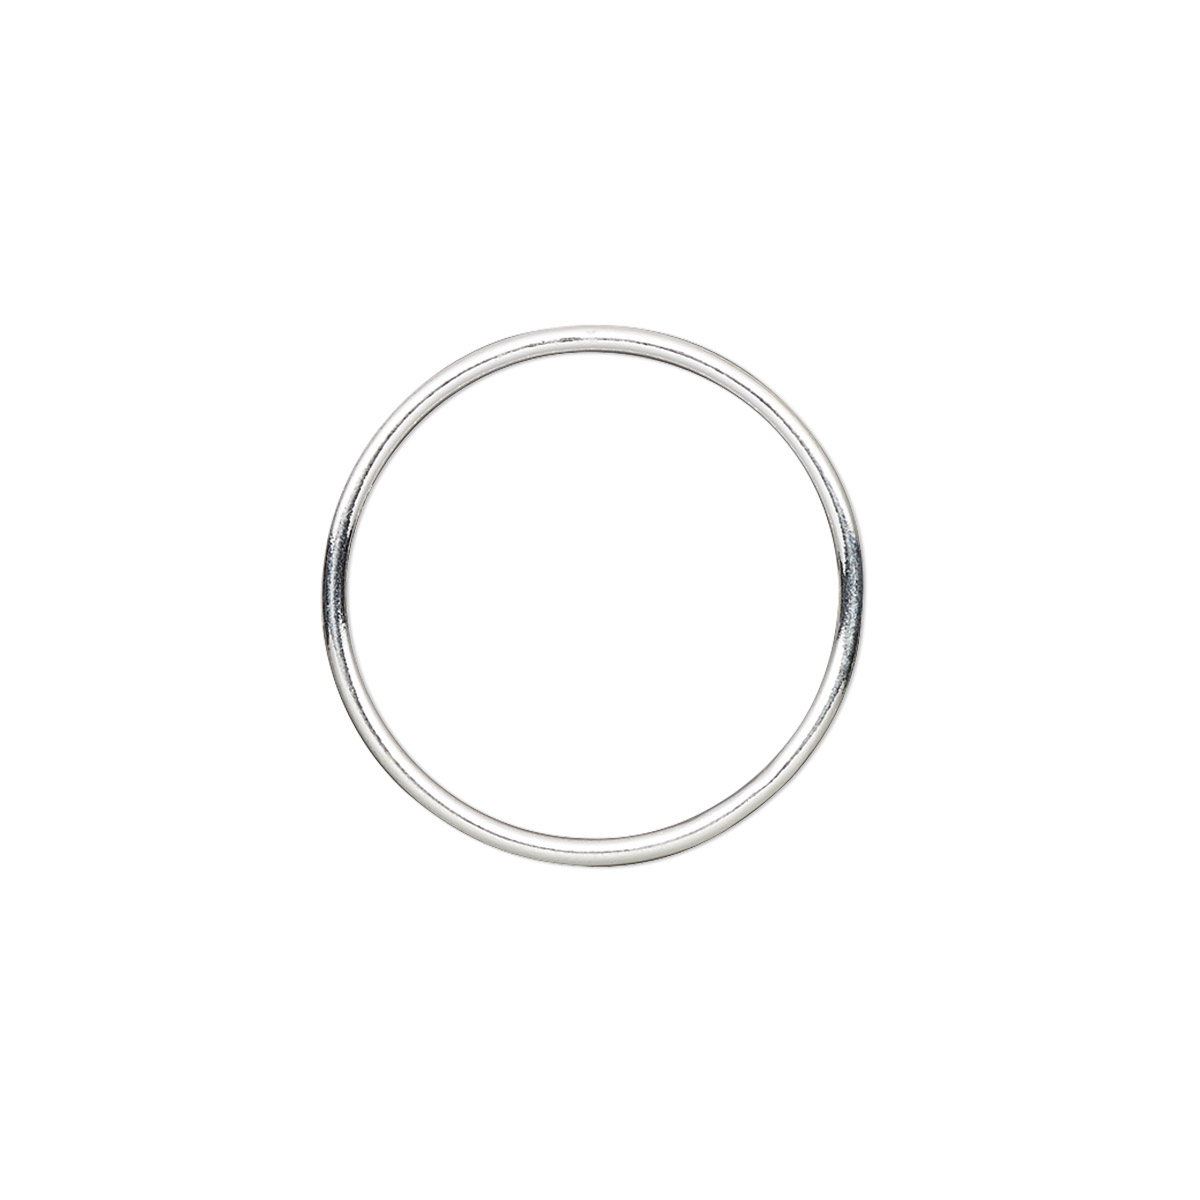 Jump ring, sterling silver, 20mm soldered round, 18.2mm inside diameter ...